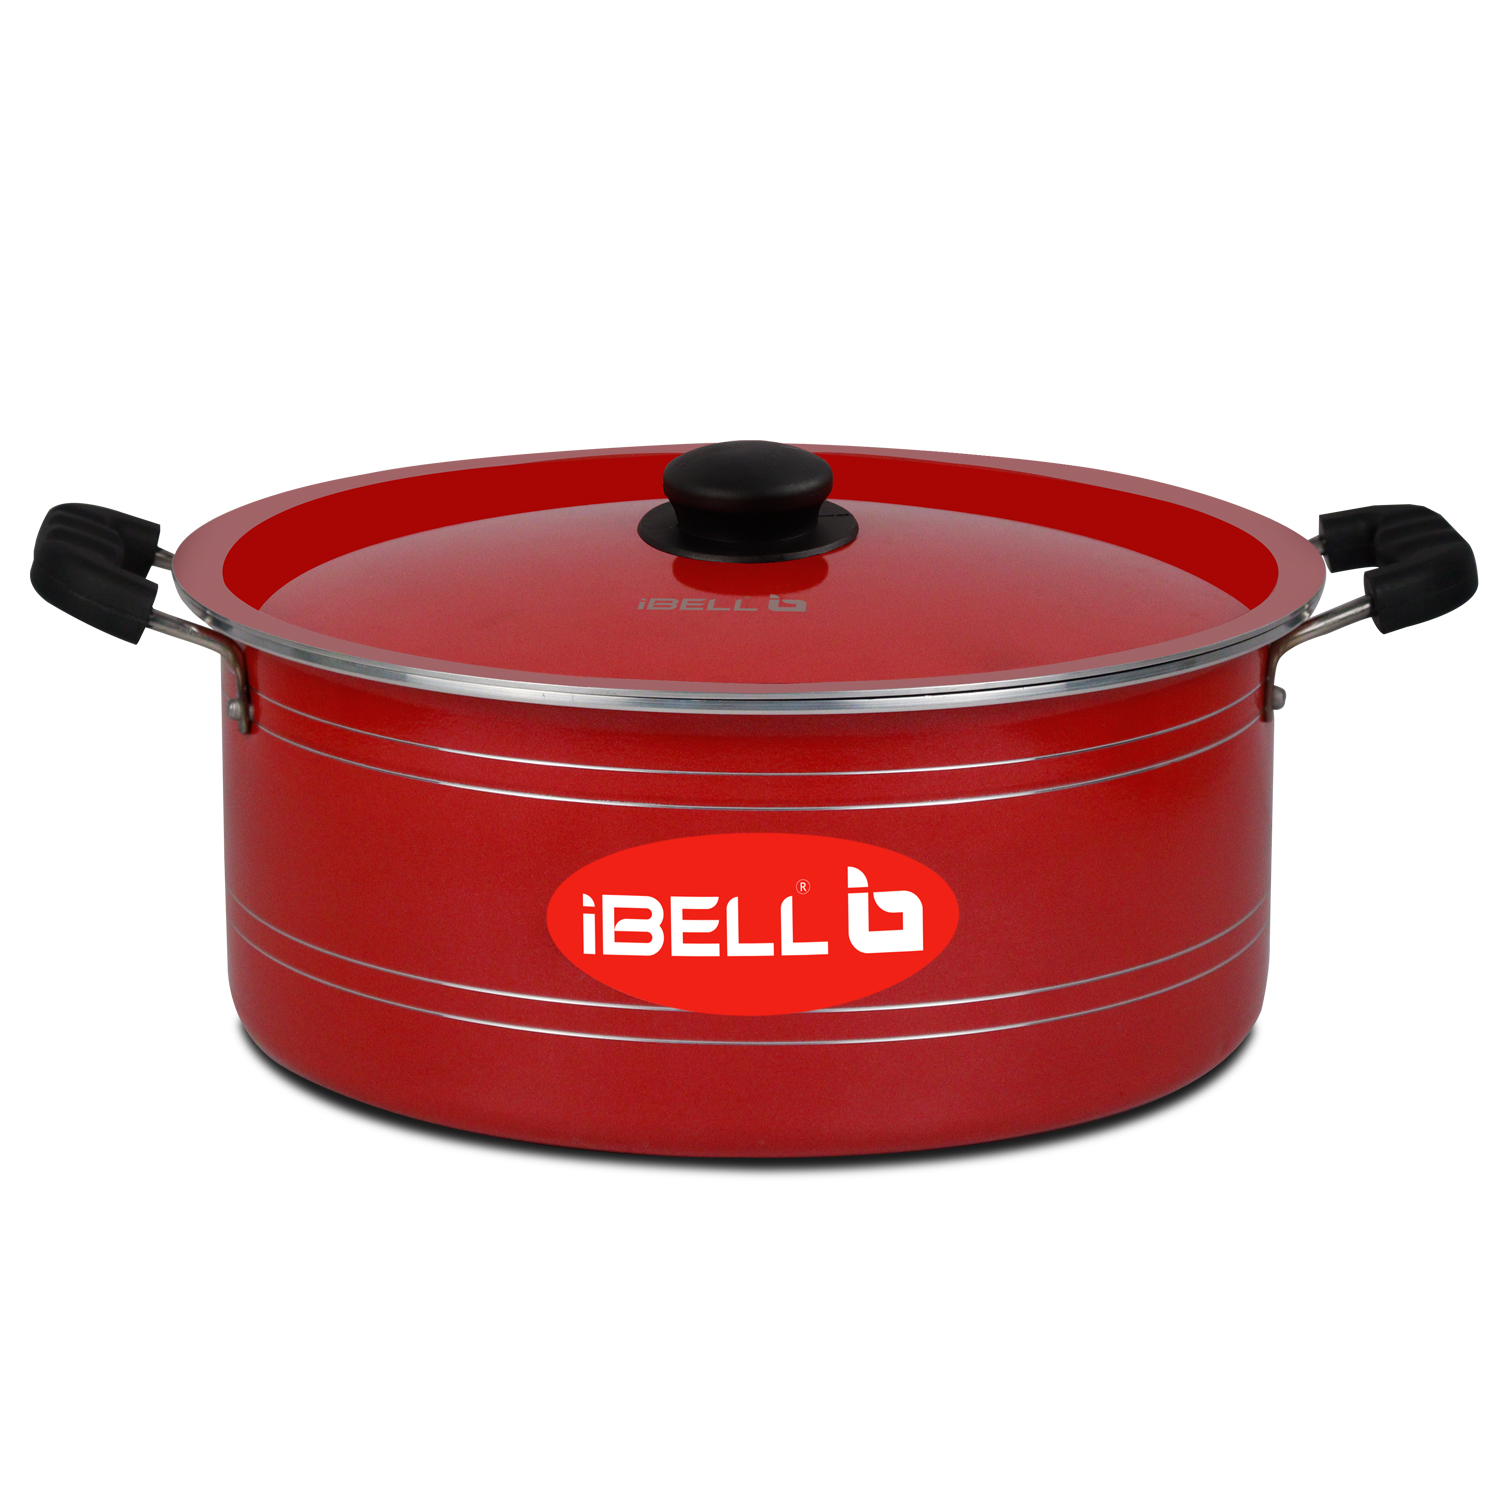 Ibell non stick coated aluminium large biriyani pot with lid 10